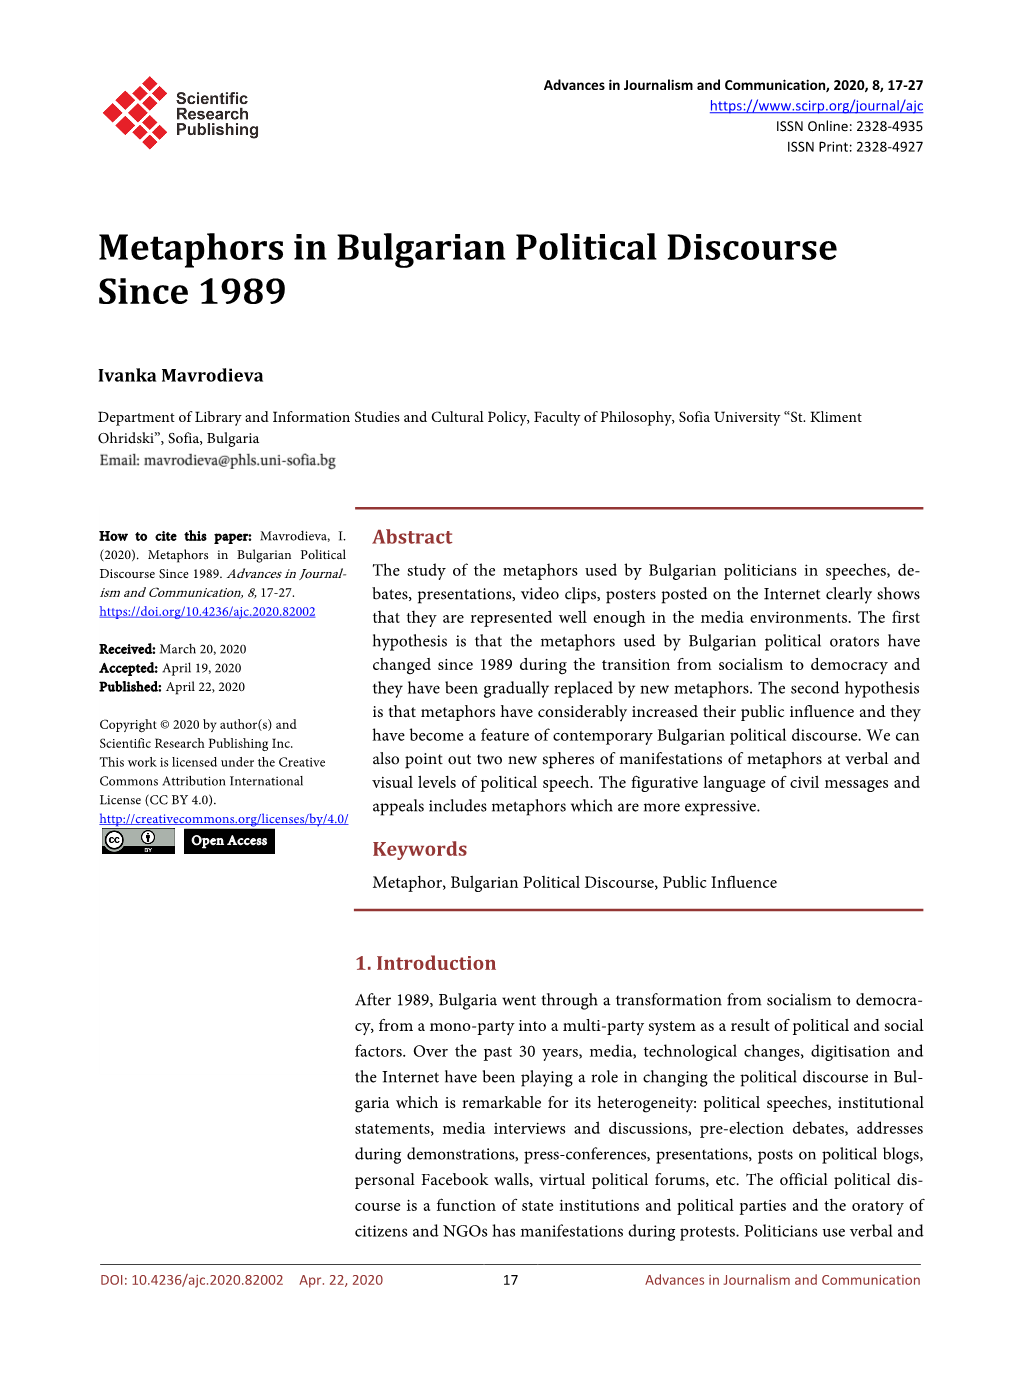 Metaphors in Bulgarian Political Discourse Since 1989